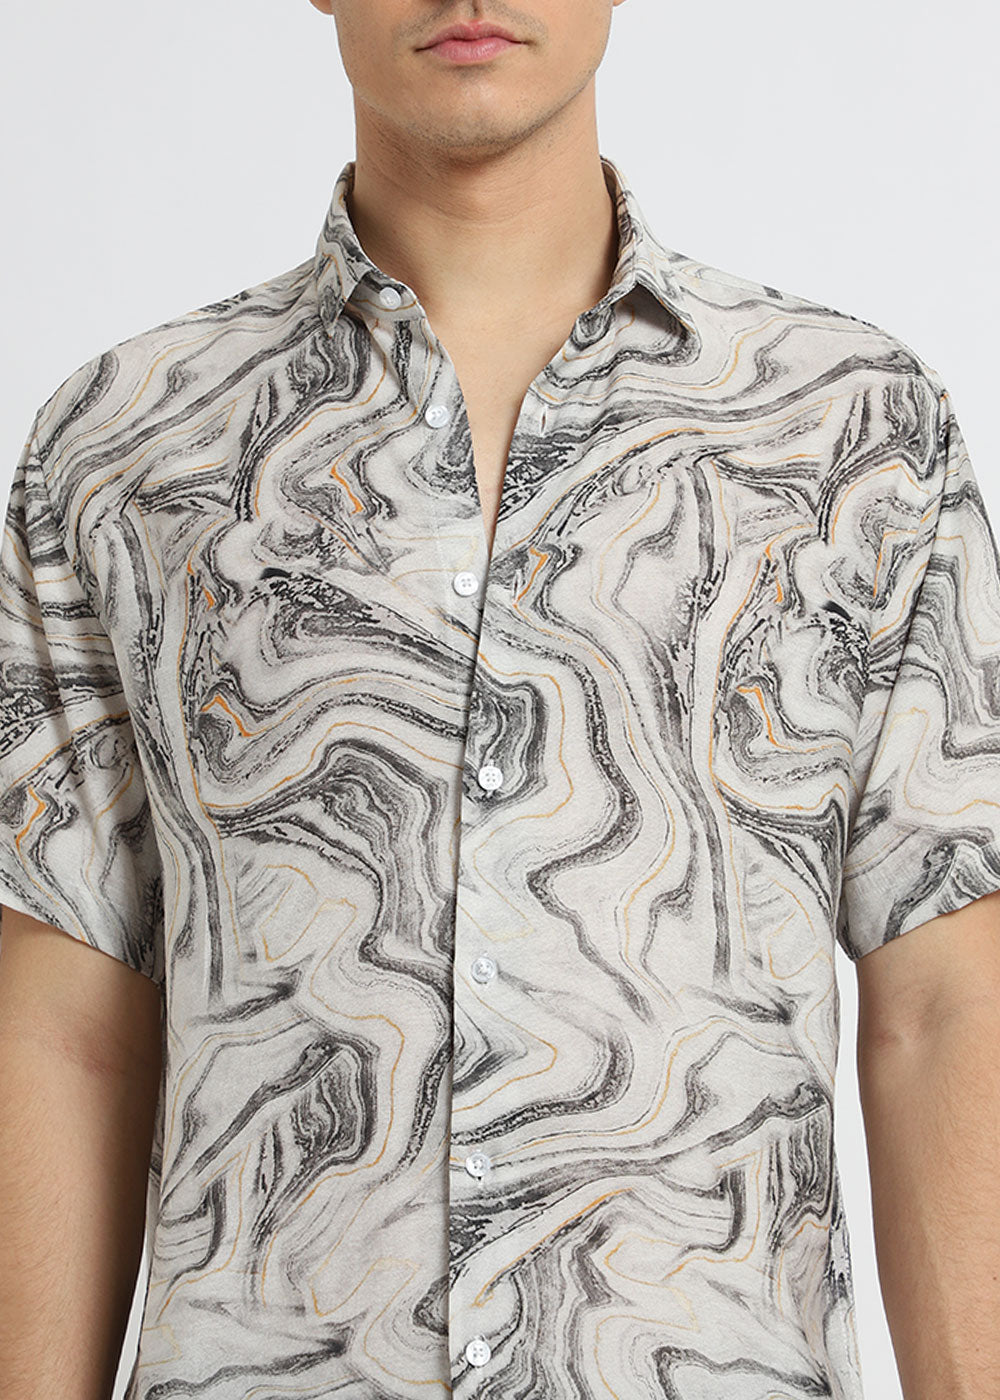 Marble Mirage Printed Shirt